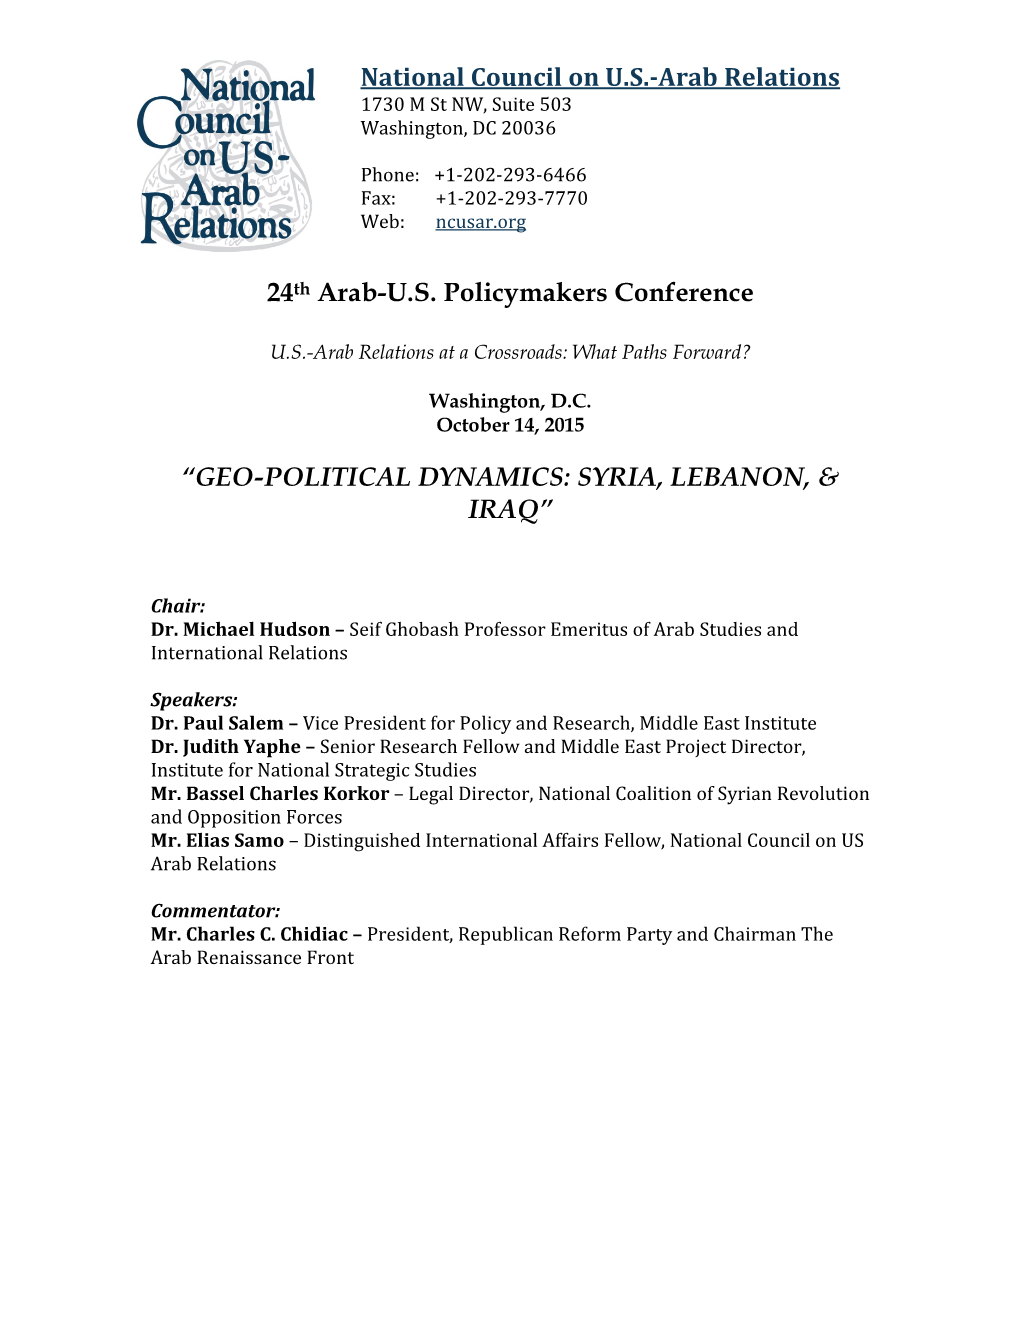 "Geo-Political Dynamics: Syria, Lebanon, and Iraq" Transcript